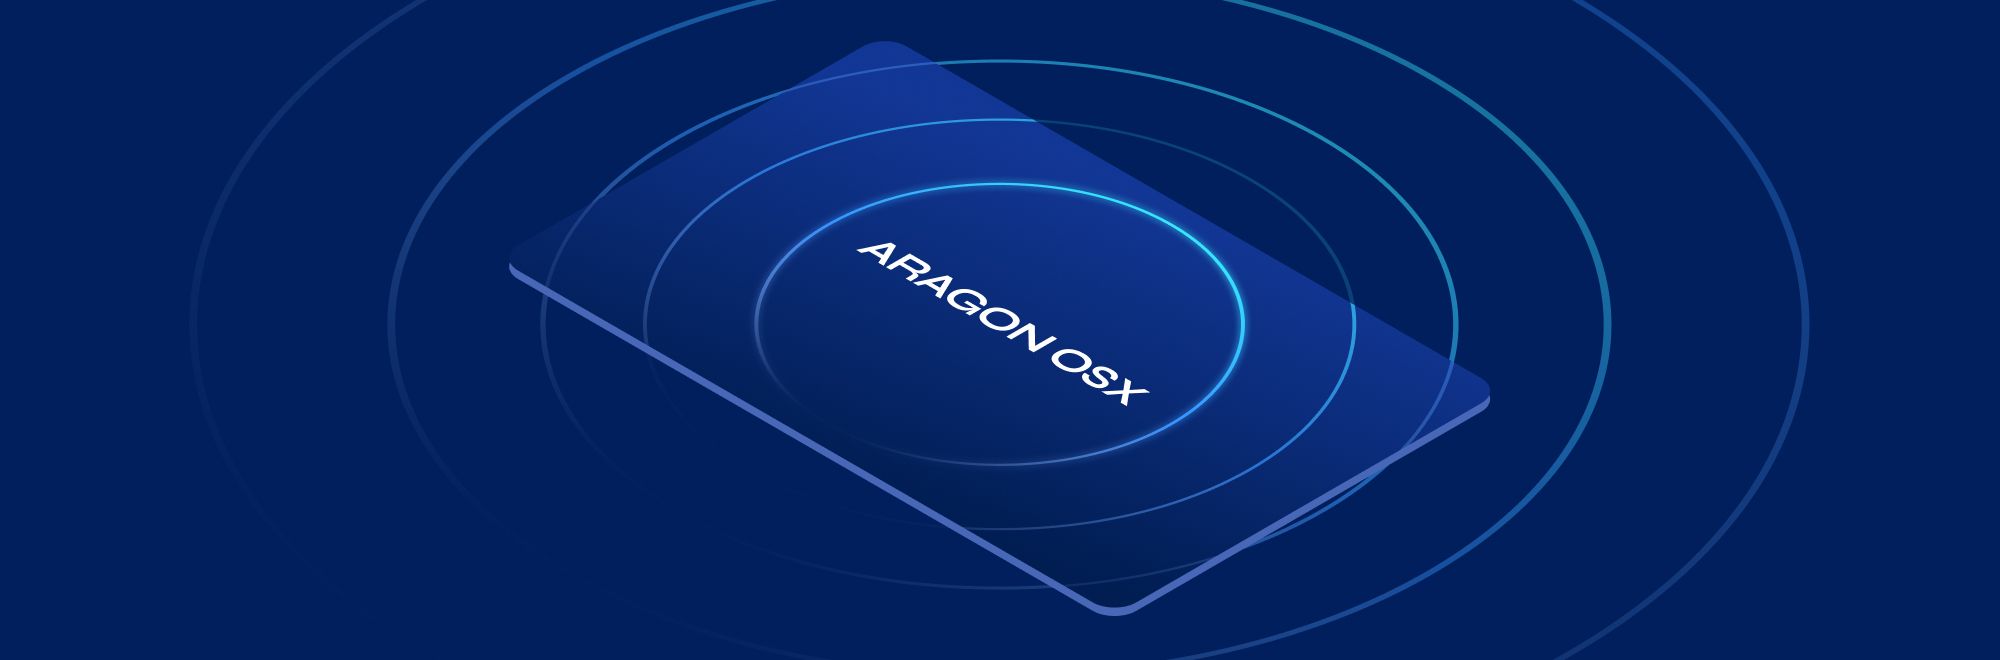 Aragon OSx: The foundational governance layer enabling adaptable organizations